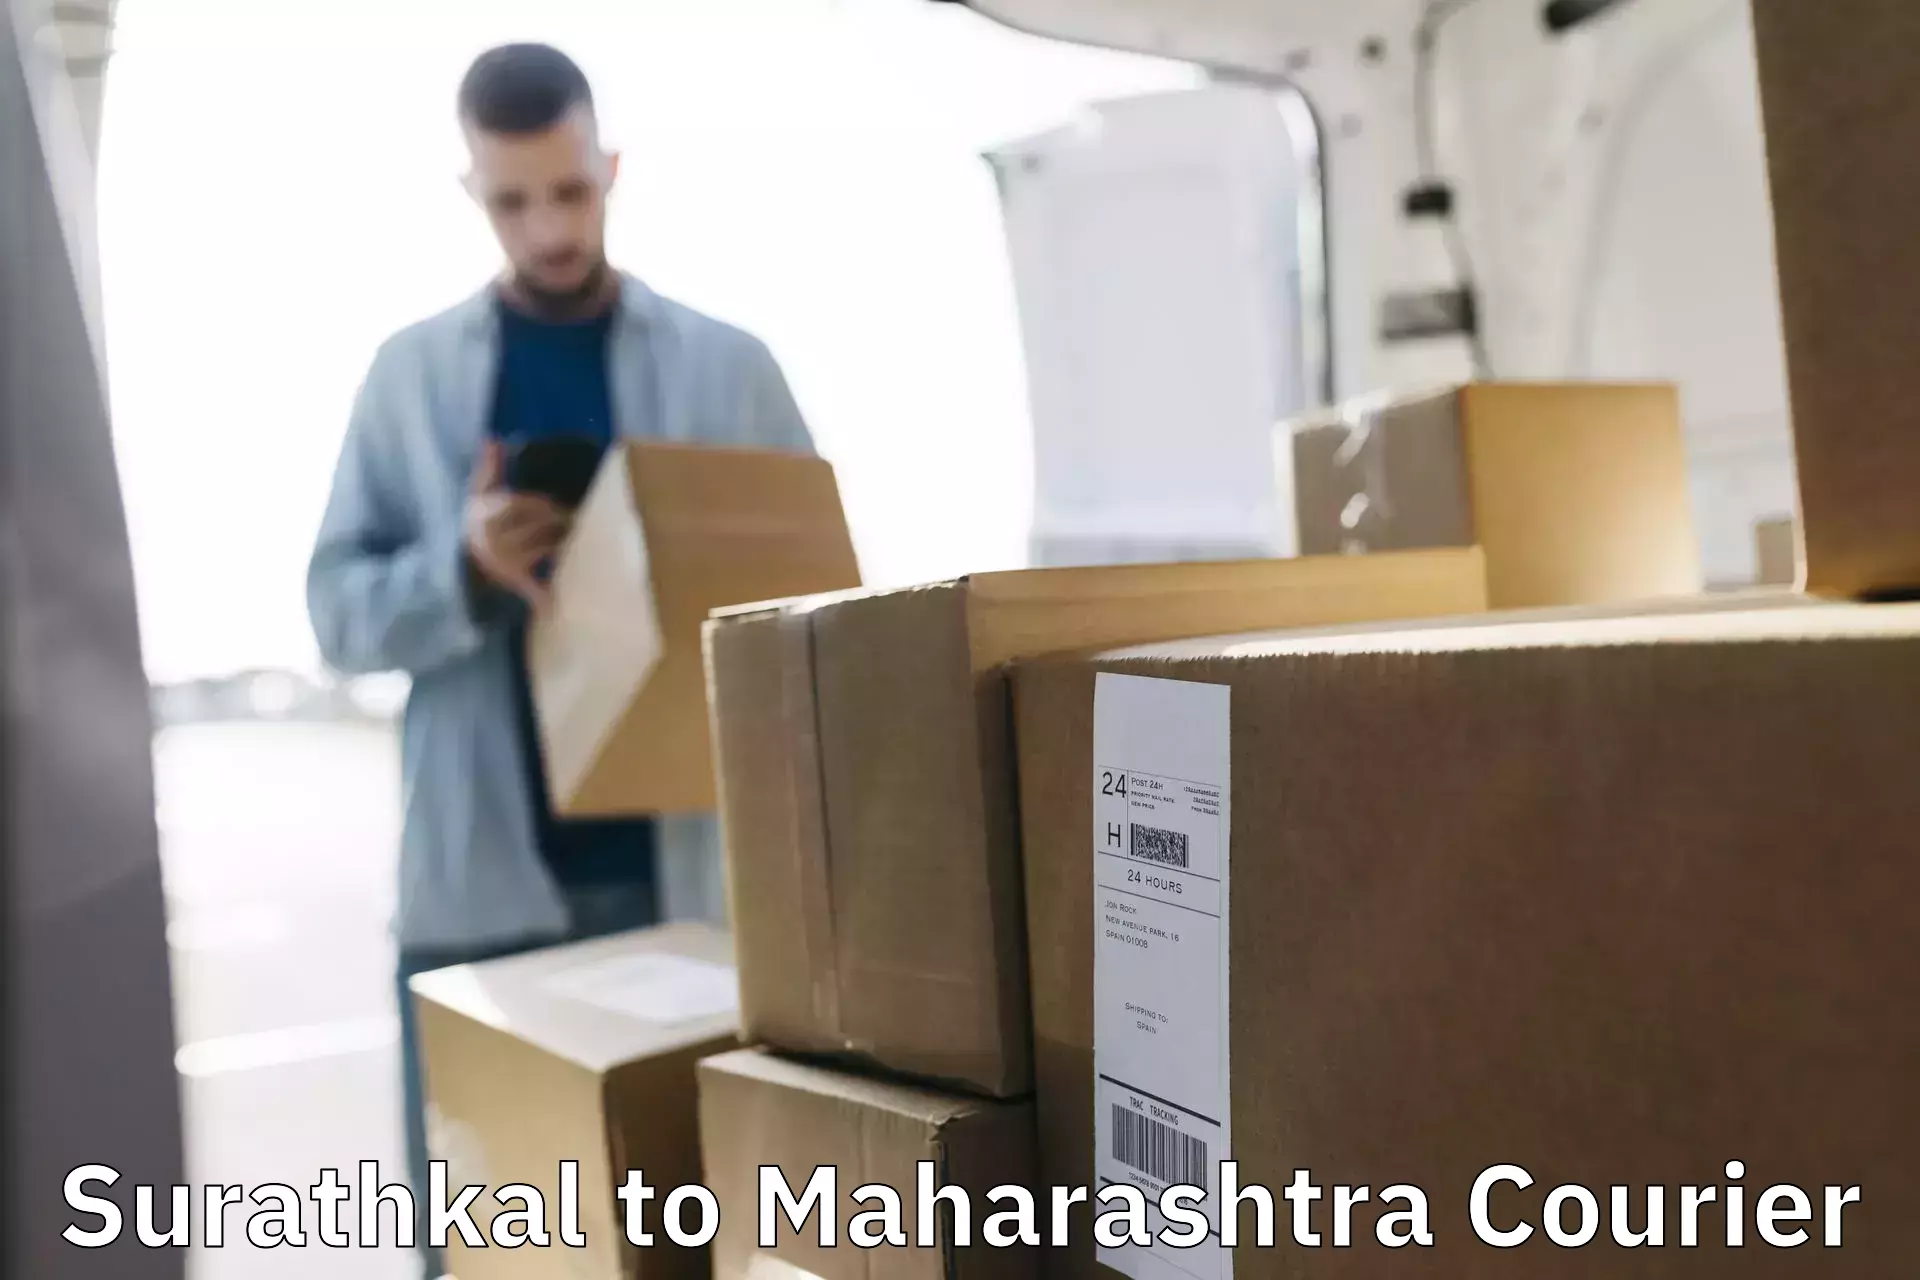 Logistics service provider Surathkal to Mahabaleshwar